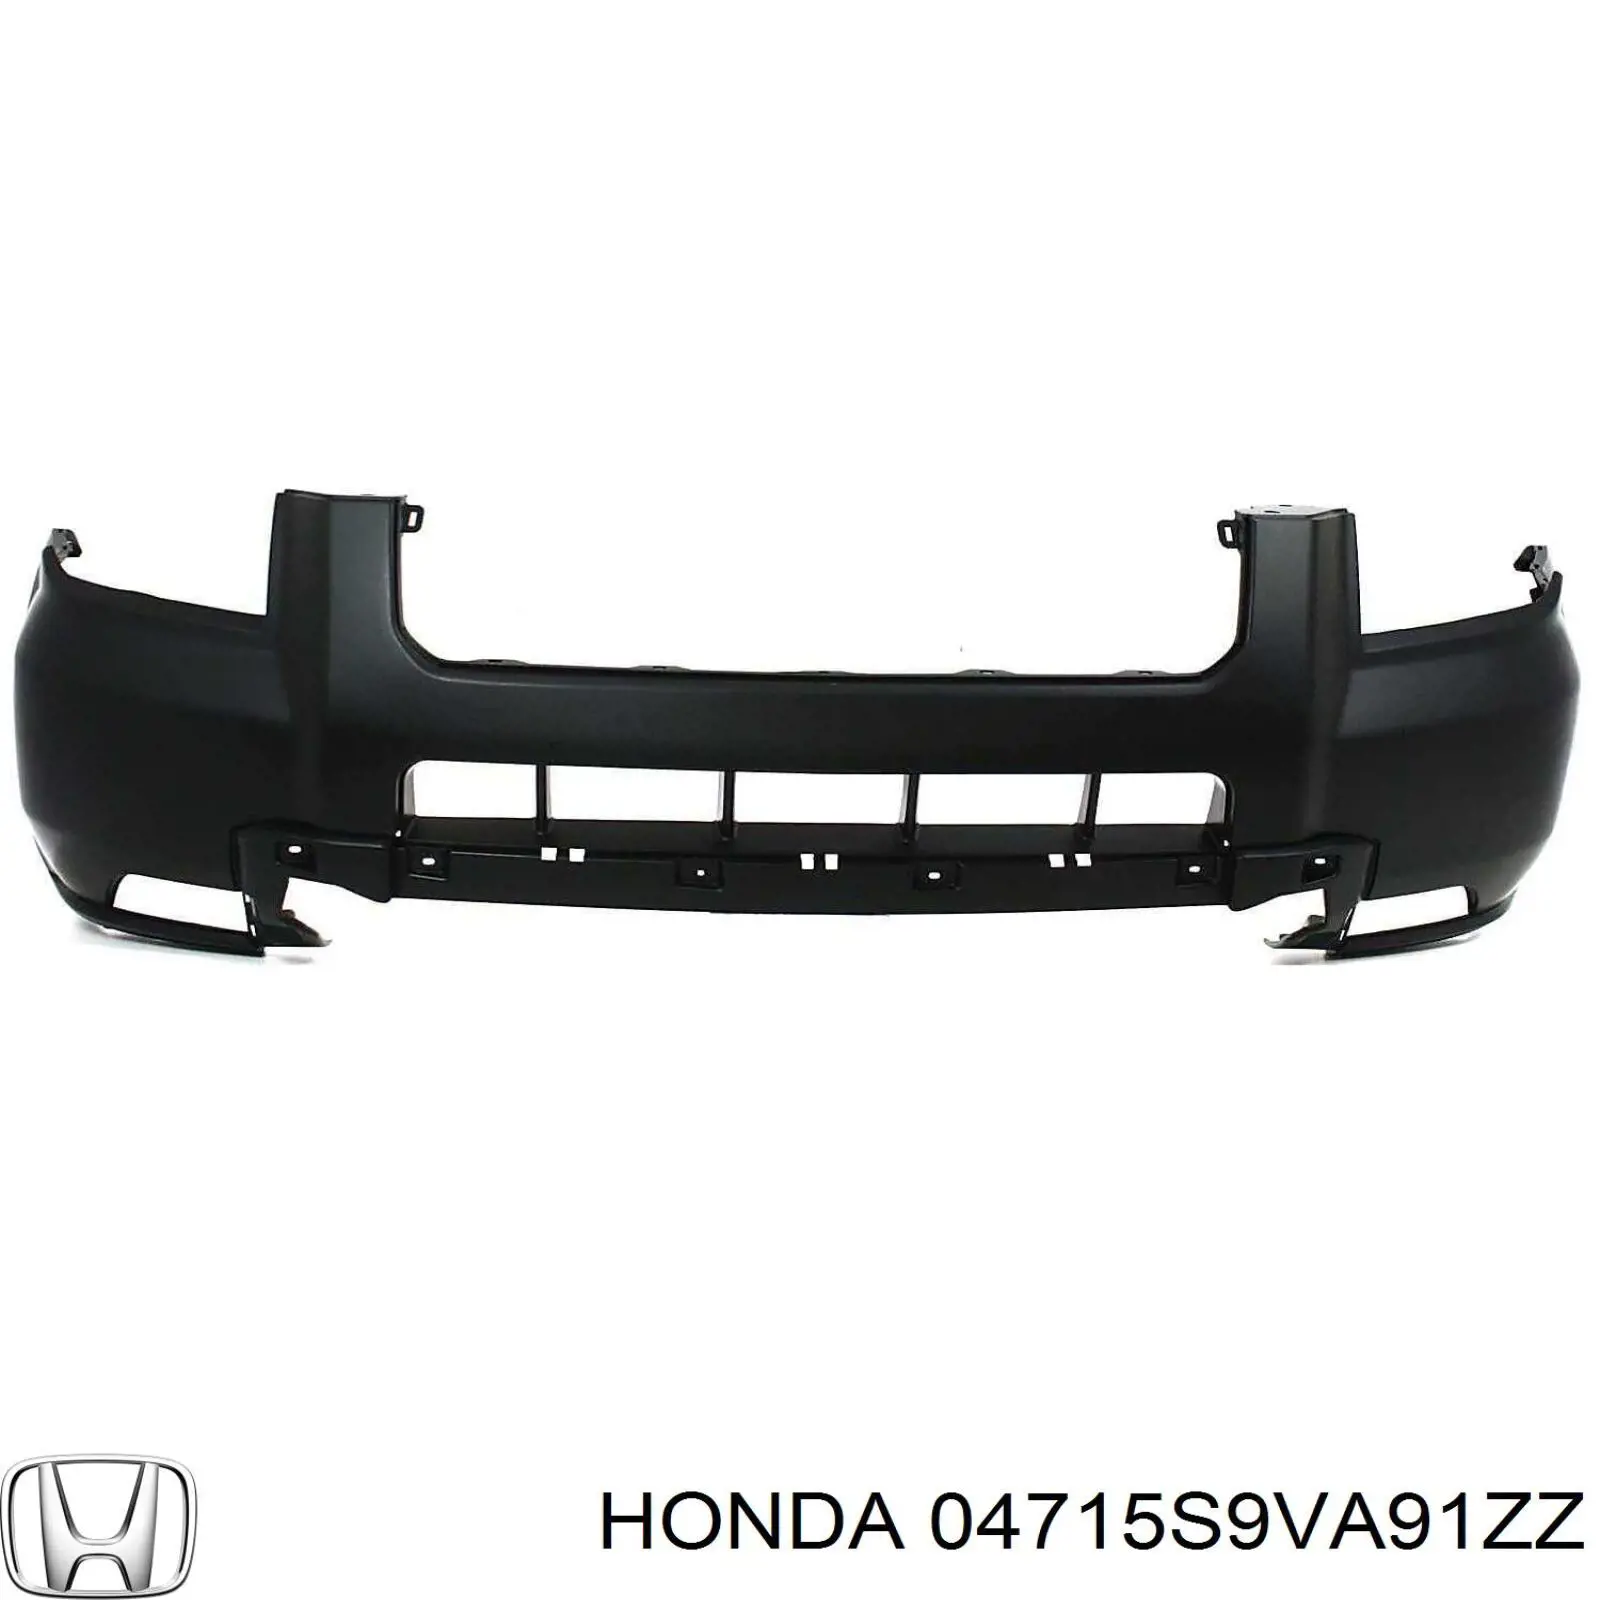 Детали хонда оригинал цена с доставкой в киев и ндс на Honda Pilot 